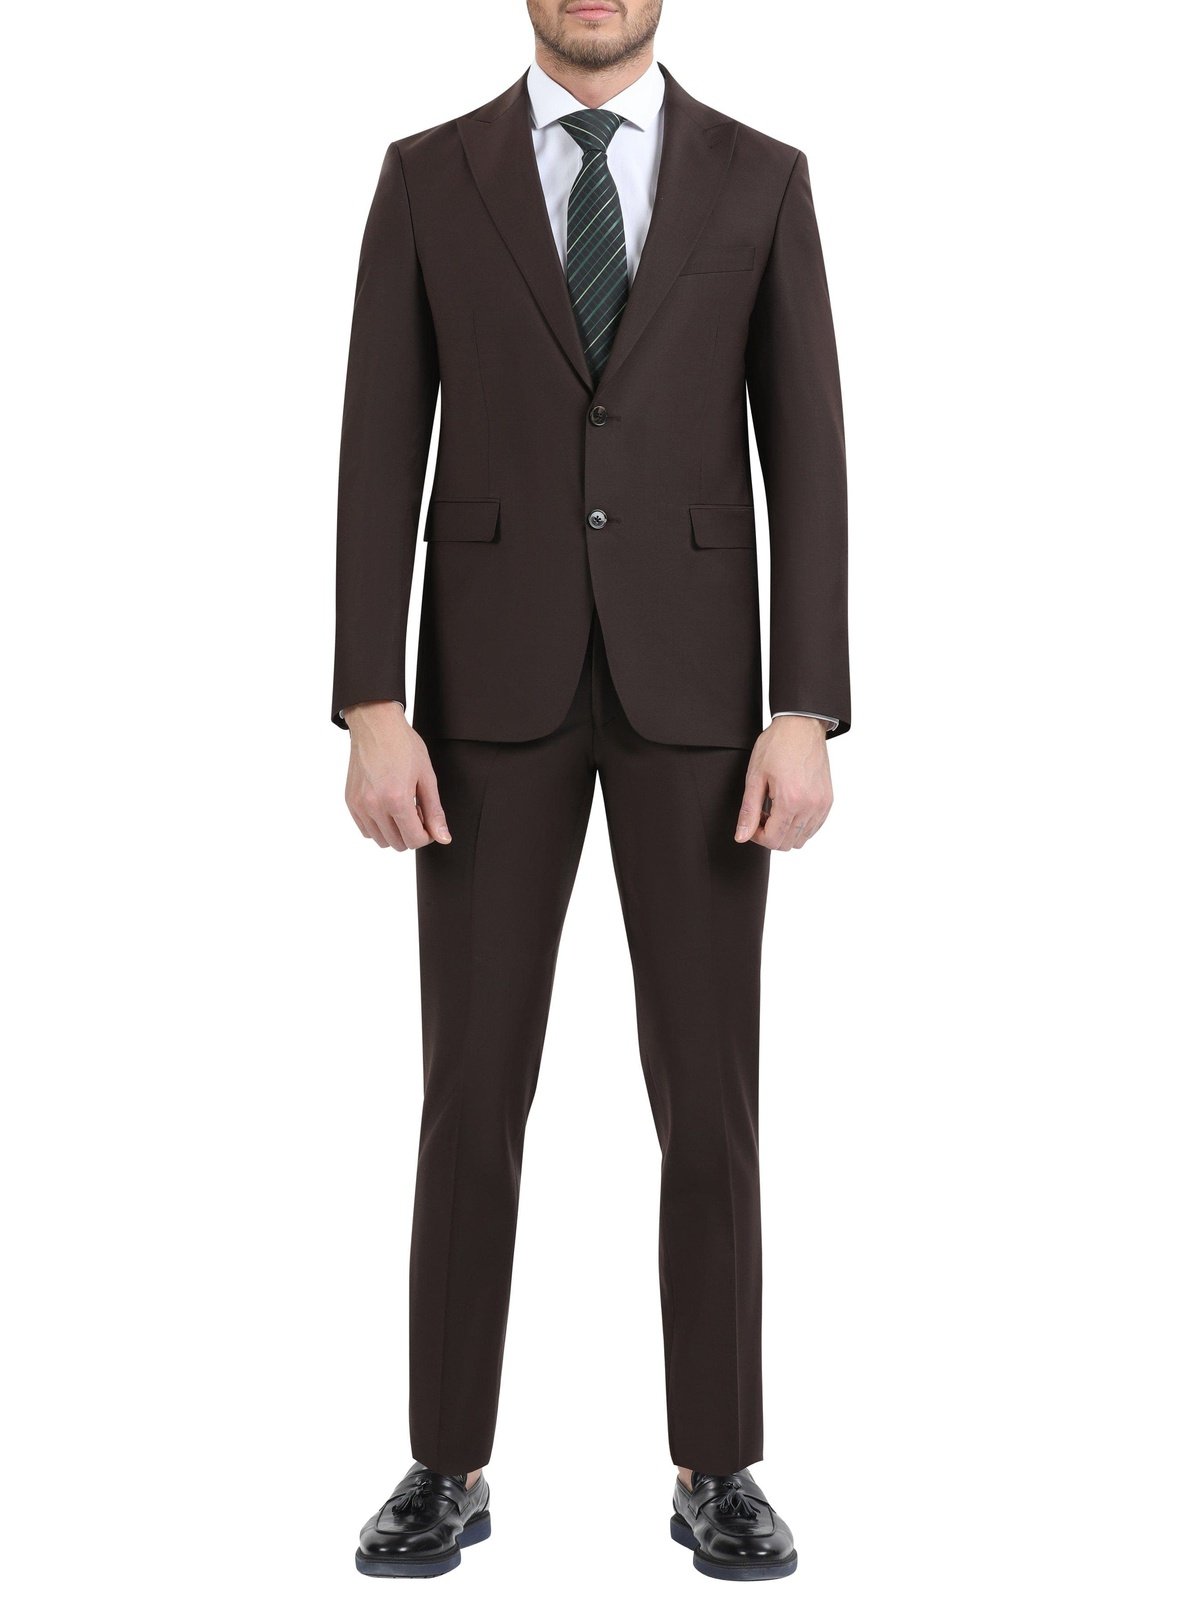 Di&#39;nucci SUITS 38R Di&#39;nucci Solid Chocolate Brown Peak Lapel Wool Suit